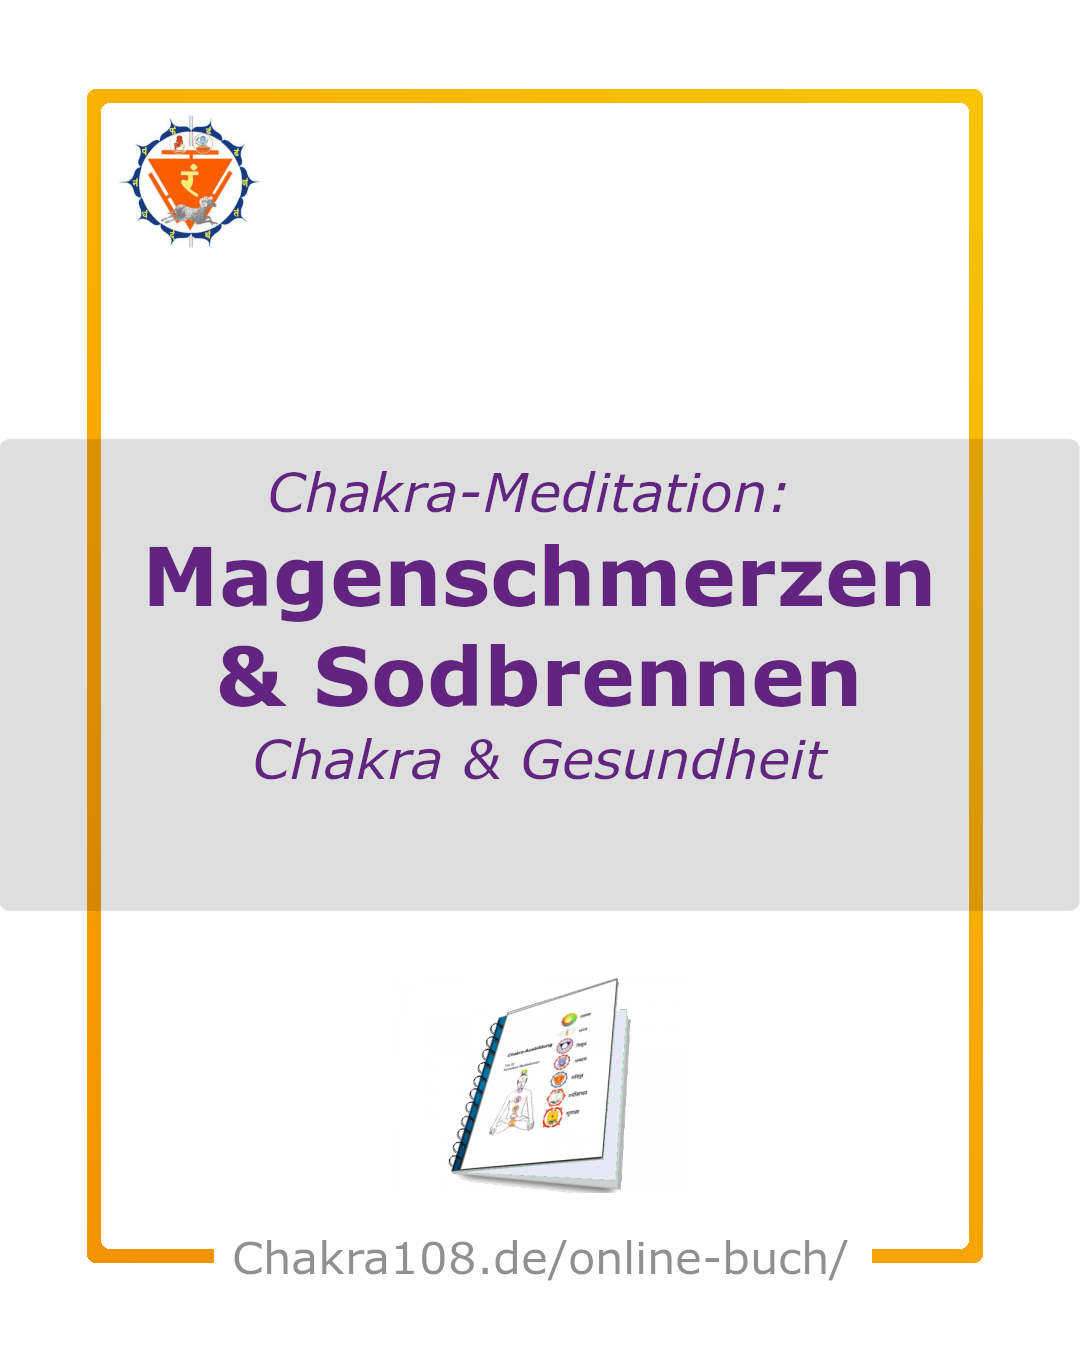 Chakra-Buch - Chakra Tools - Meditation bei Magenschmerzen und Sodbrennen - Hausmittel - Chakra108.de